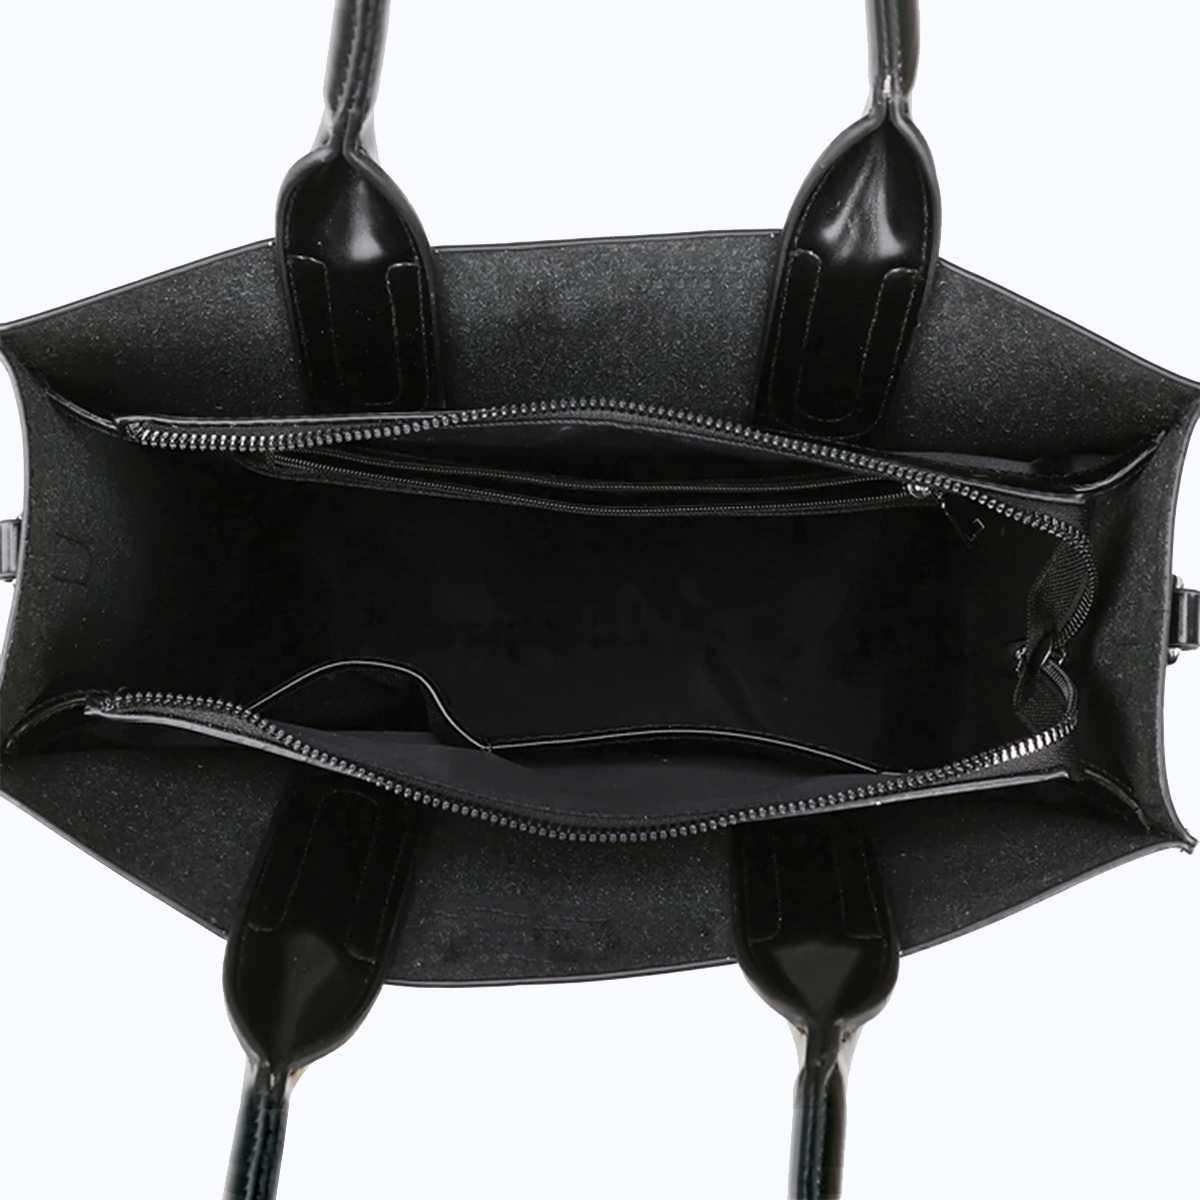 Griffon Bruxellois Luxury Handbag V4